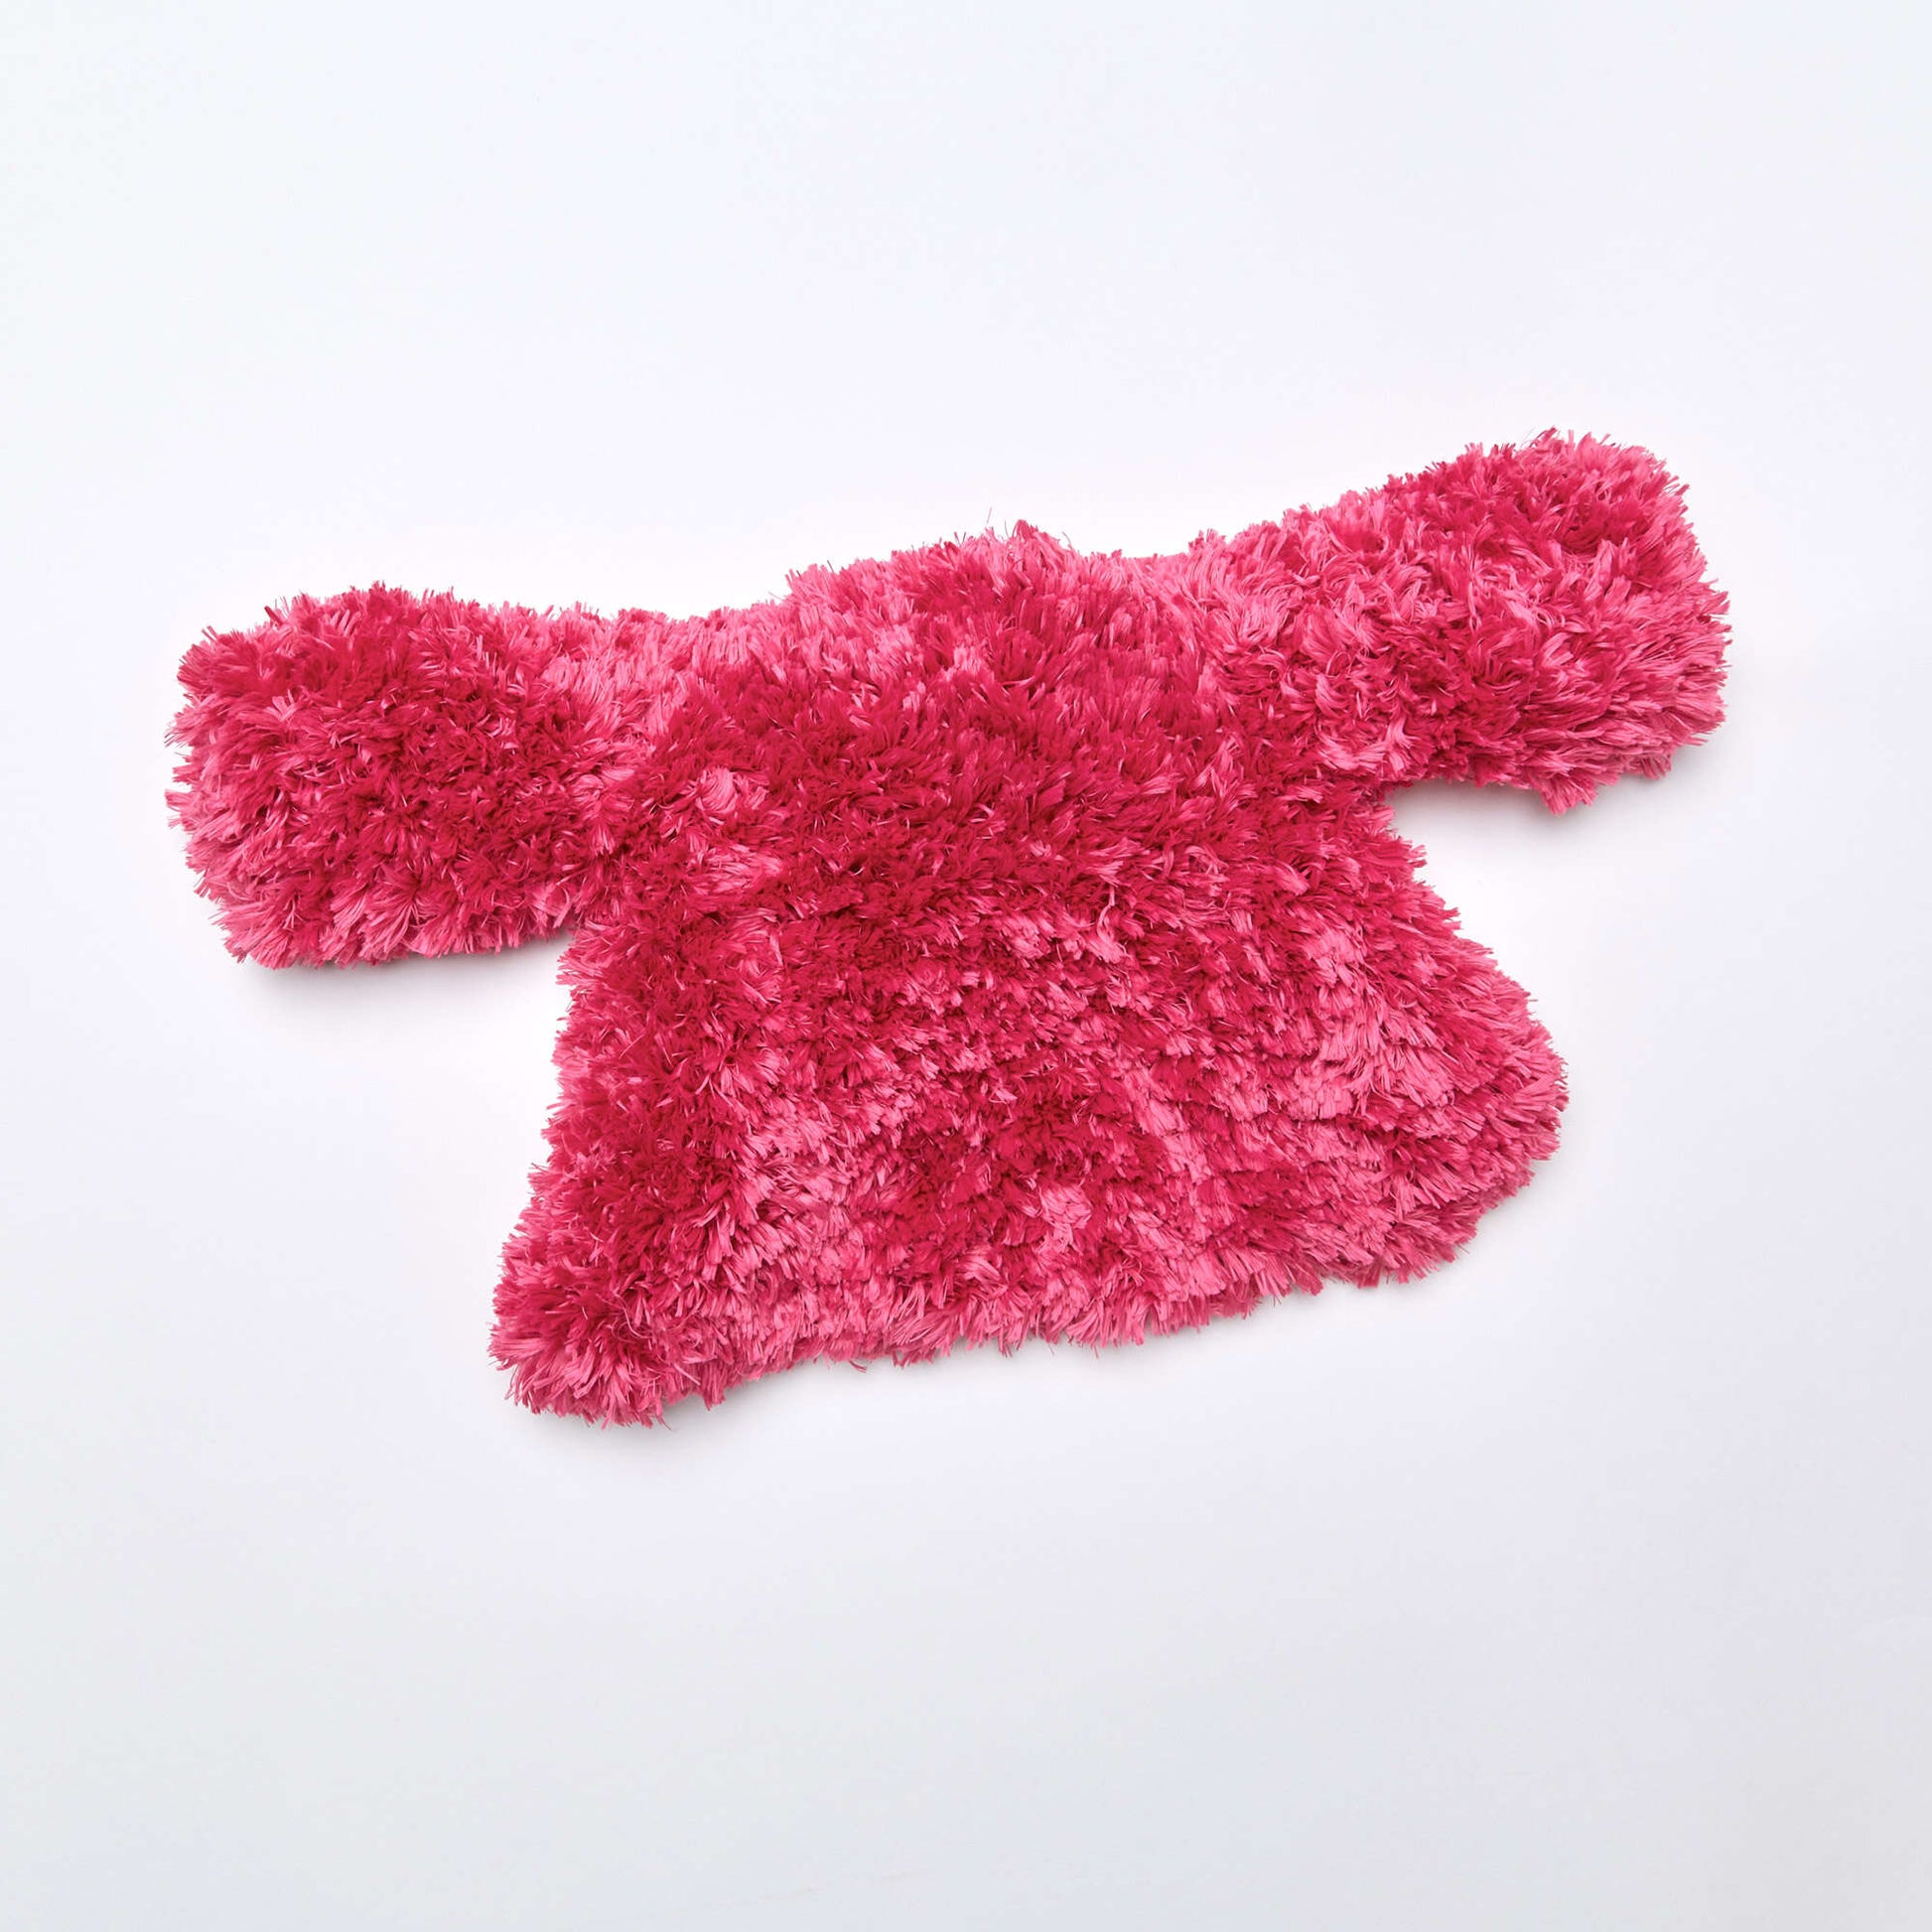 Free Red Heart Knit Girls' Fashion Fur Shrug Pattern